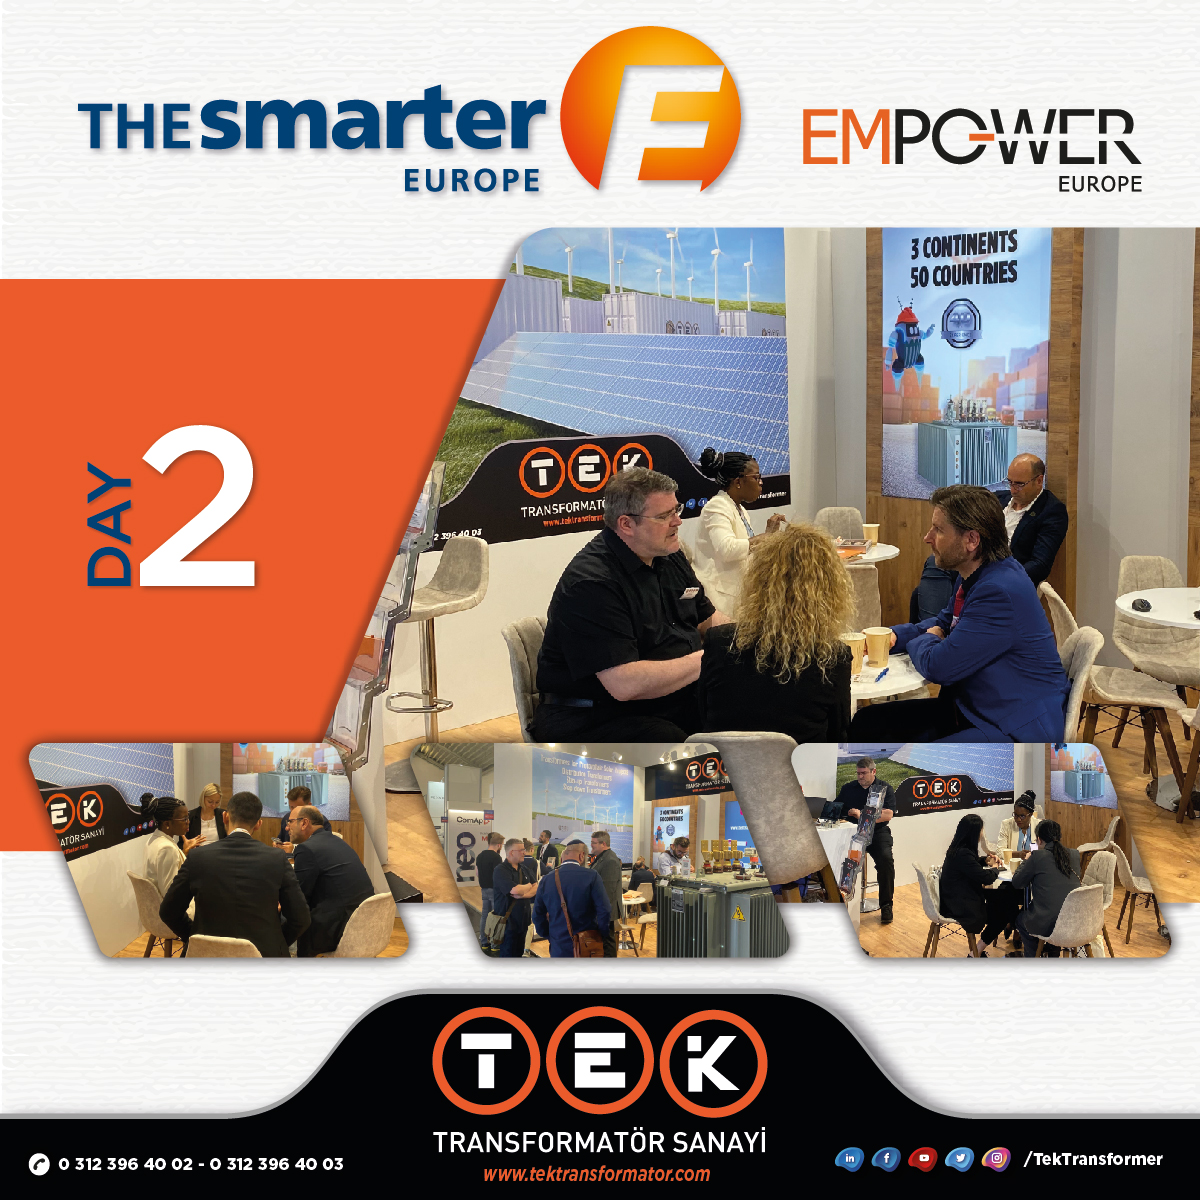 The Smarter E Europe / Munich-Germany
DAY 2
We are in Hall B5 Booth 510
#thesmartereeurope #empowereurope #intersolar #tektransformatör #tektransformator #tektransformer #transformer #transformatör #transformator #energy #electric